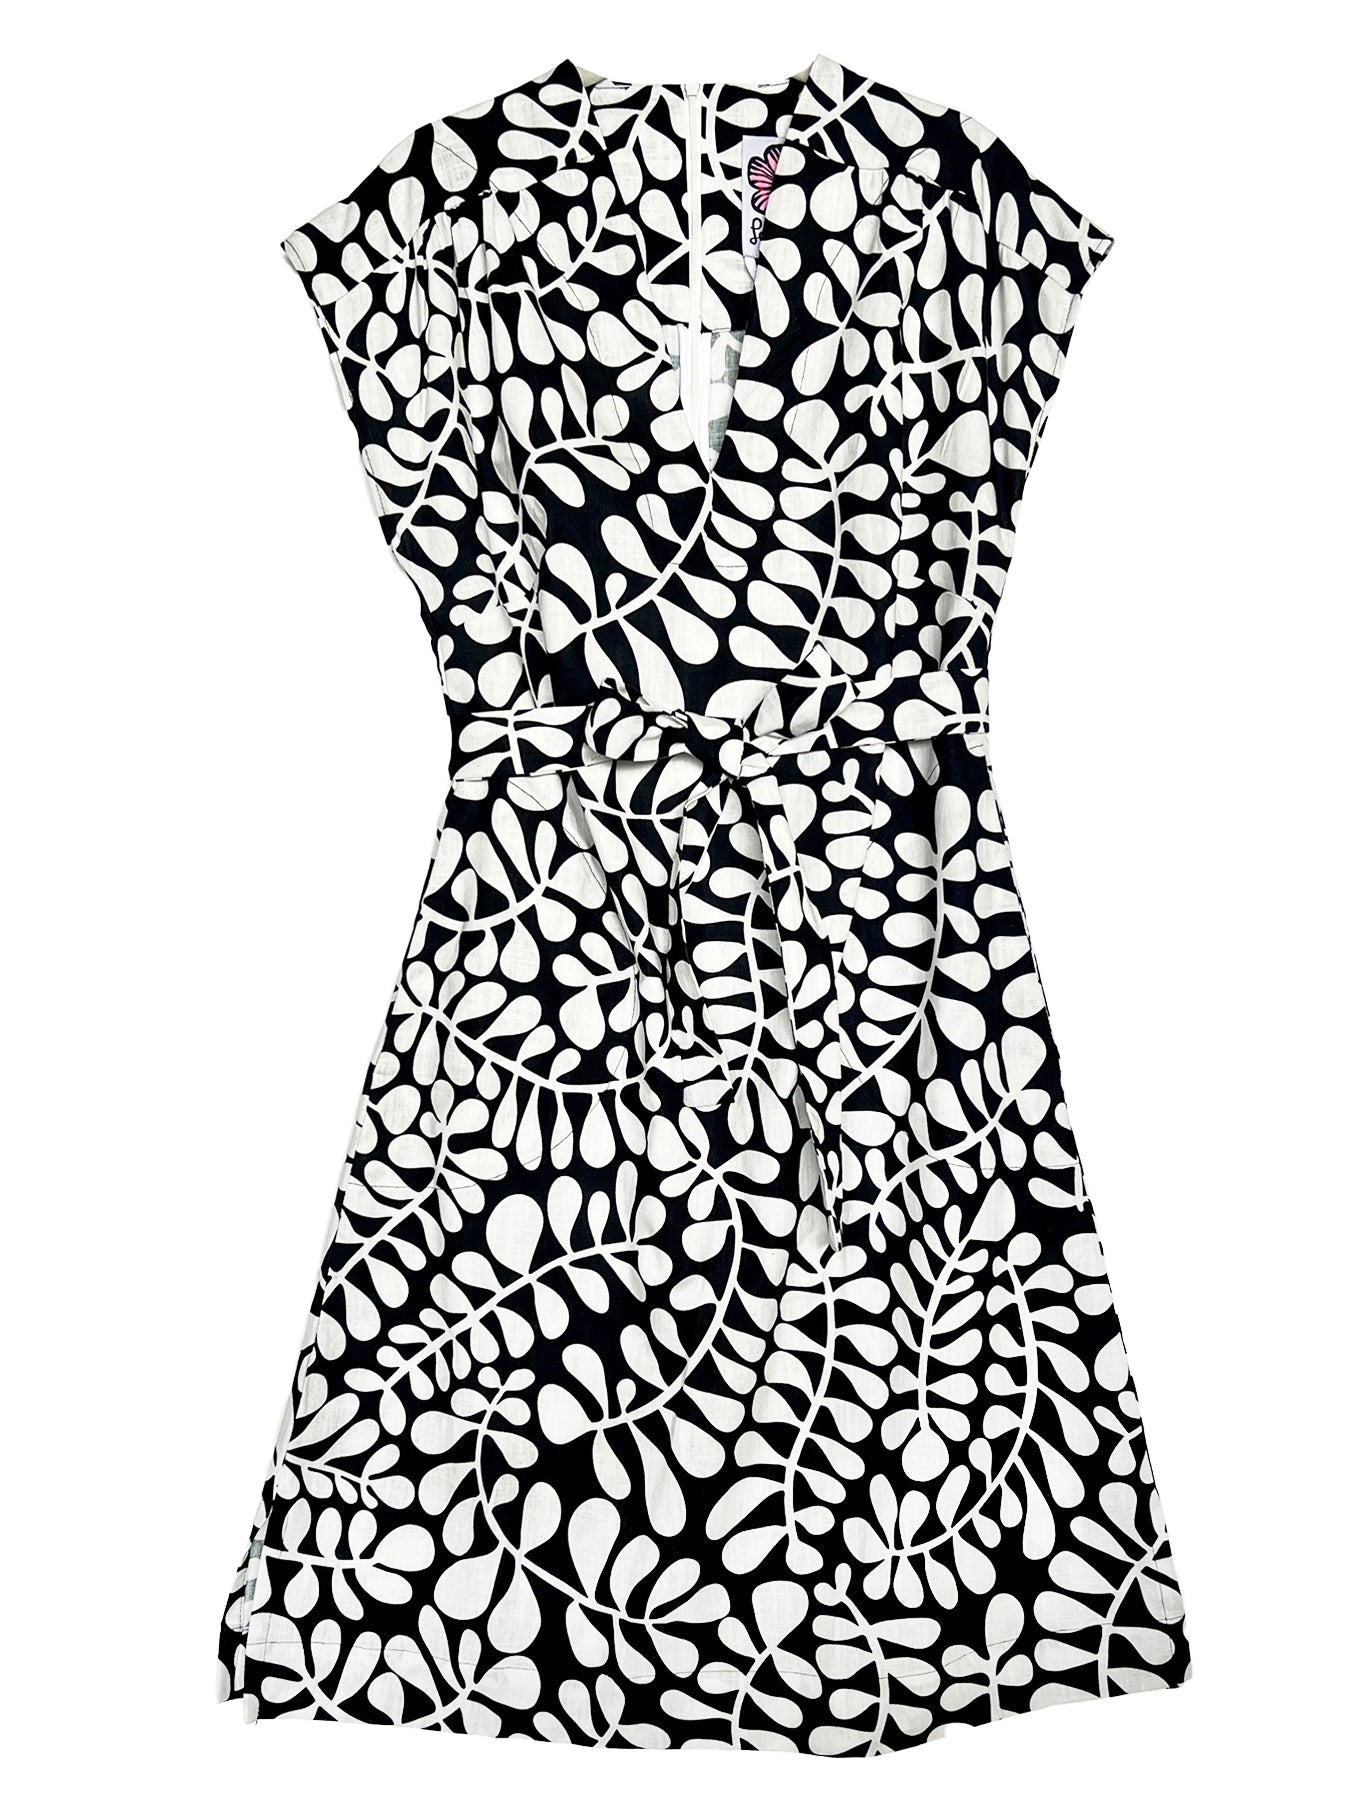 ELAINE dress Black and White Fern - Lesley Evers-blue dress-cotton dress-cotton slub dress